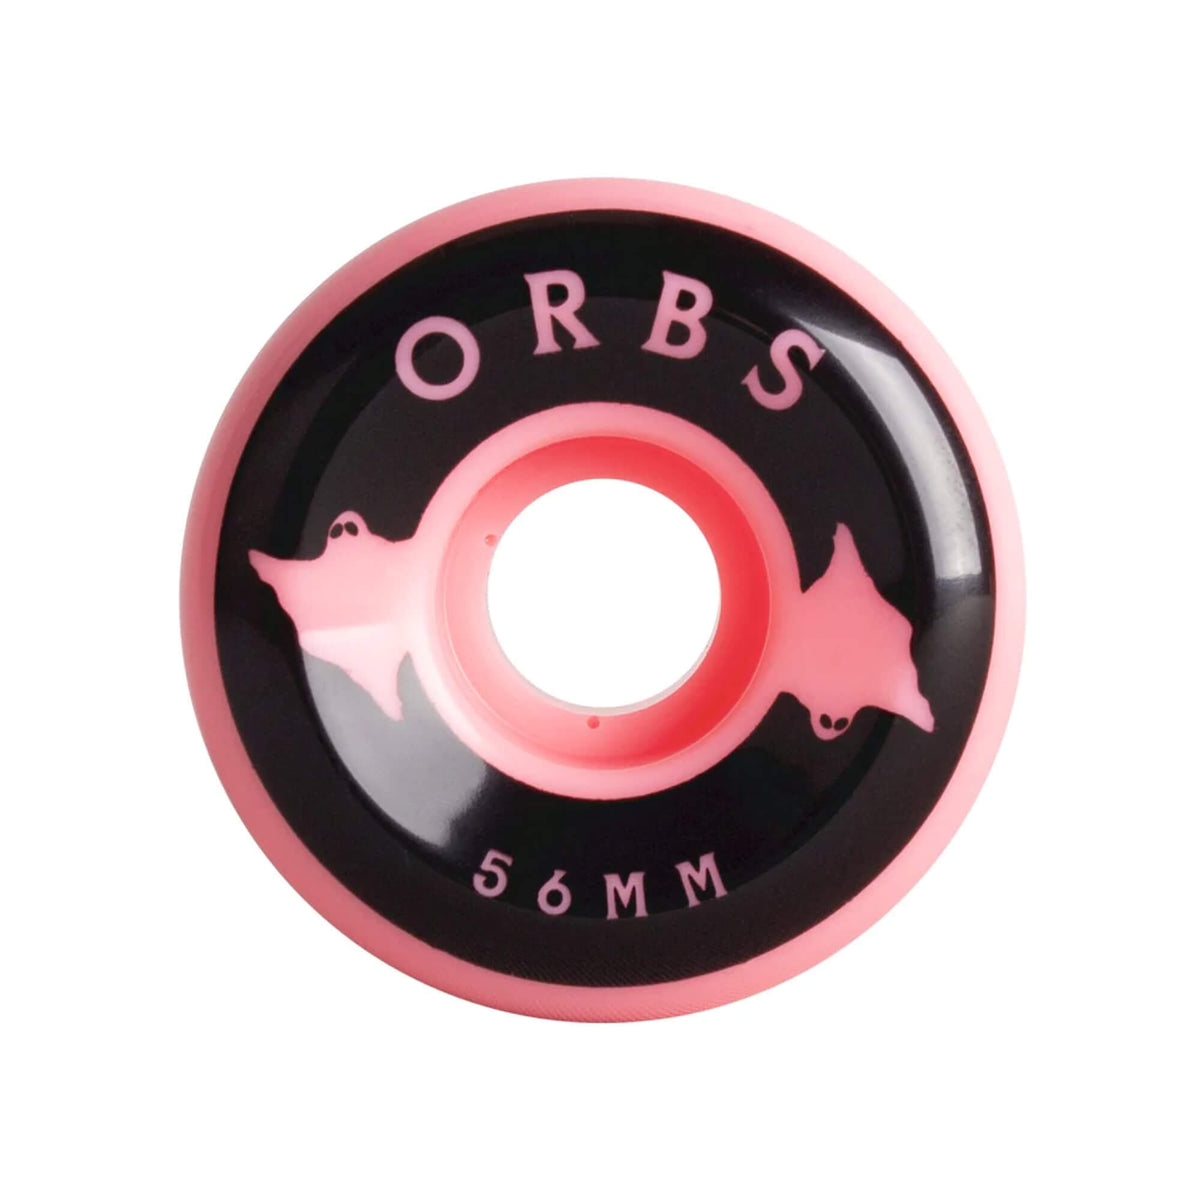 Orbs Skateboarding Wheels Specters Solid 56mm Coral